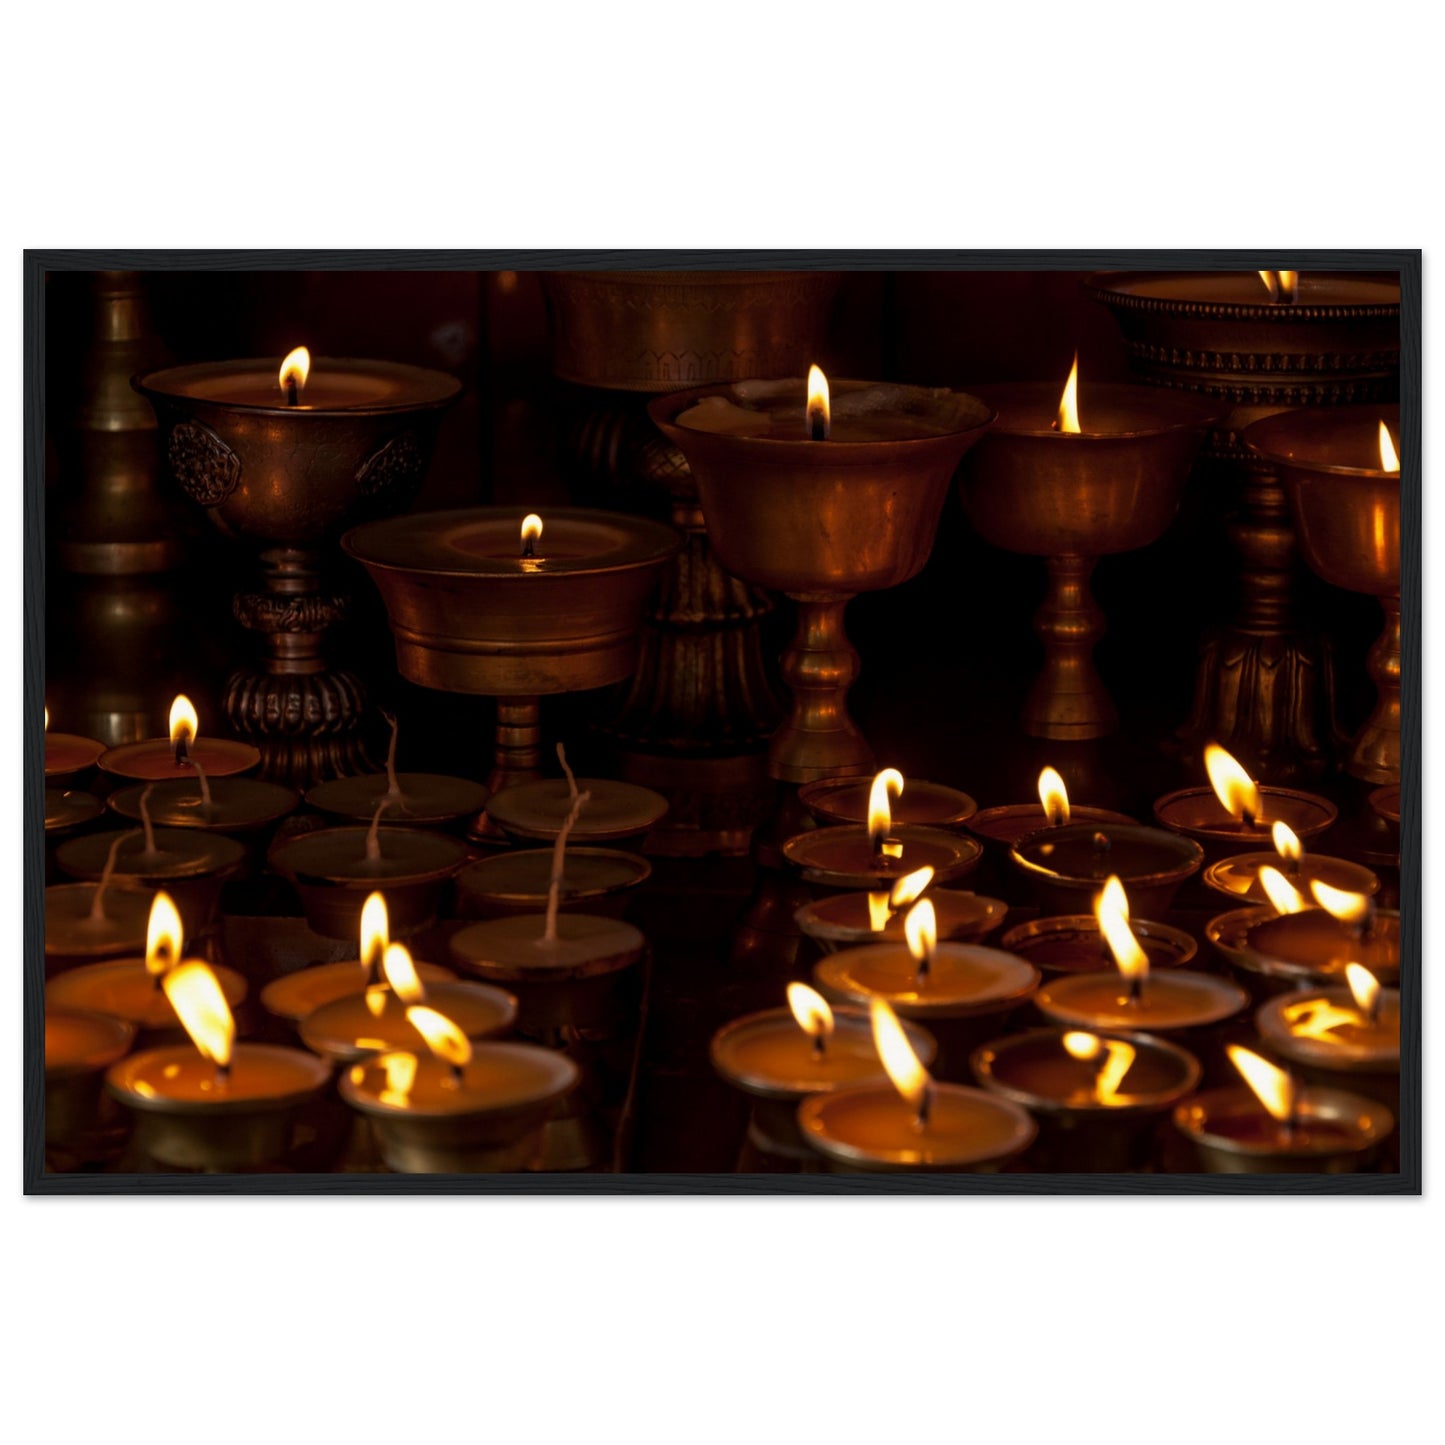 Lit candles at the monkey temple of Kathmandu